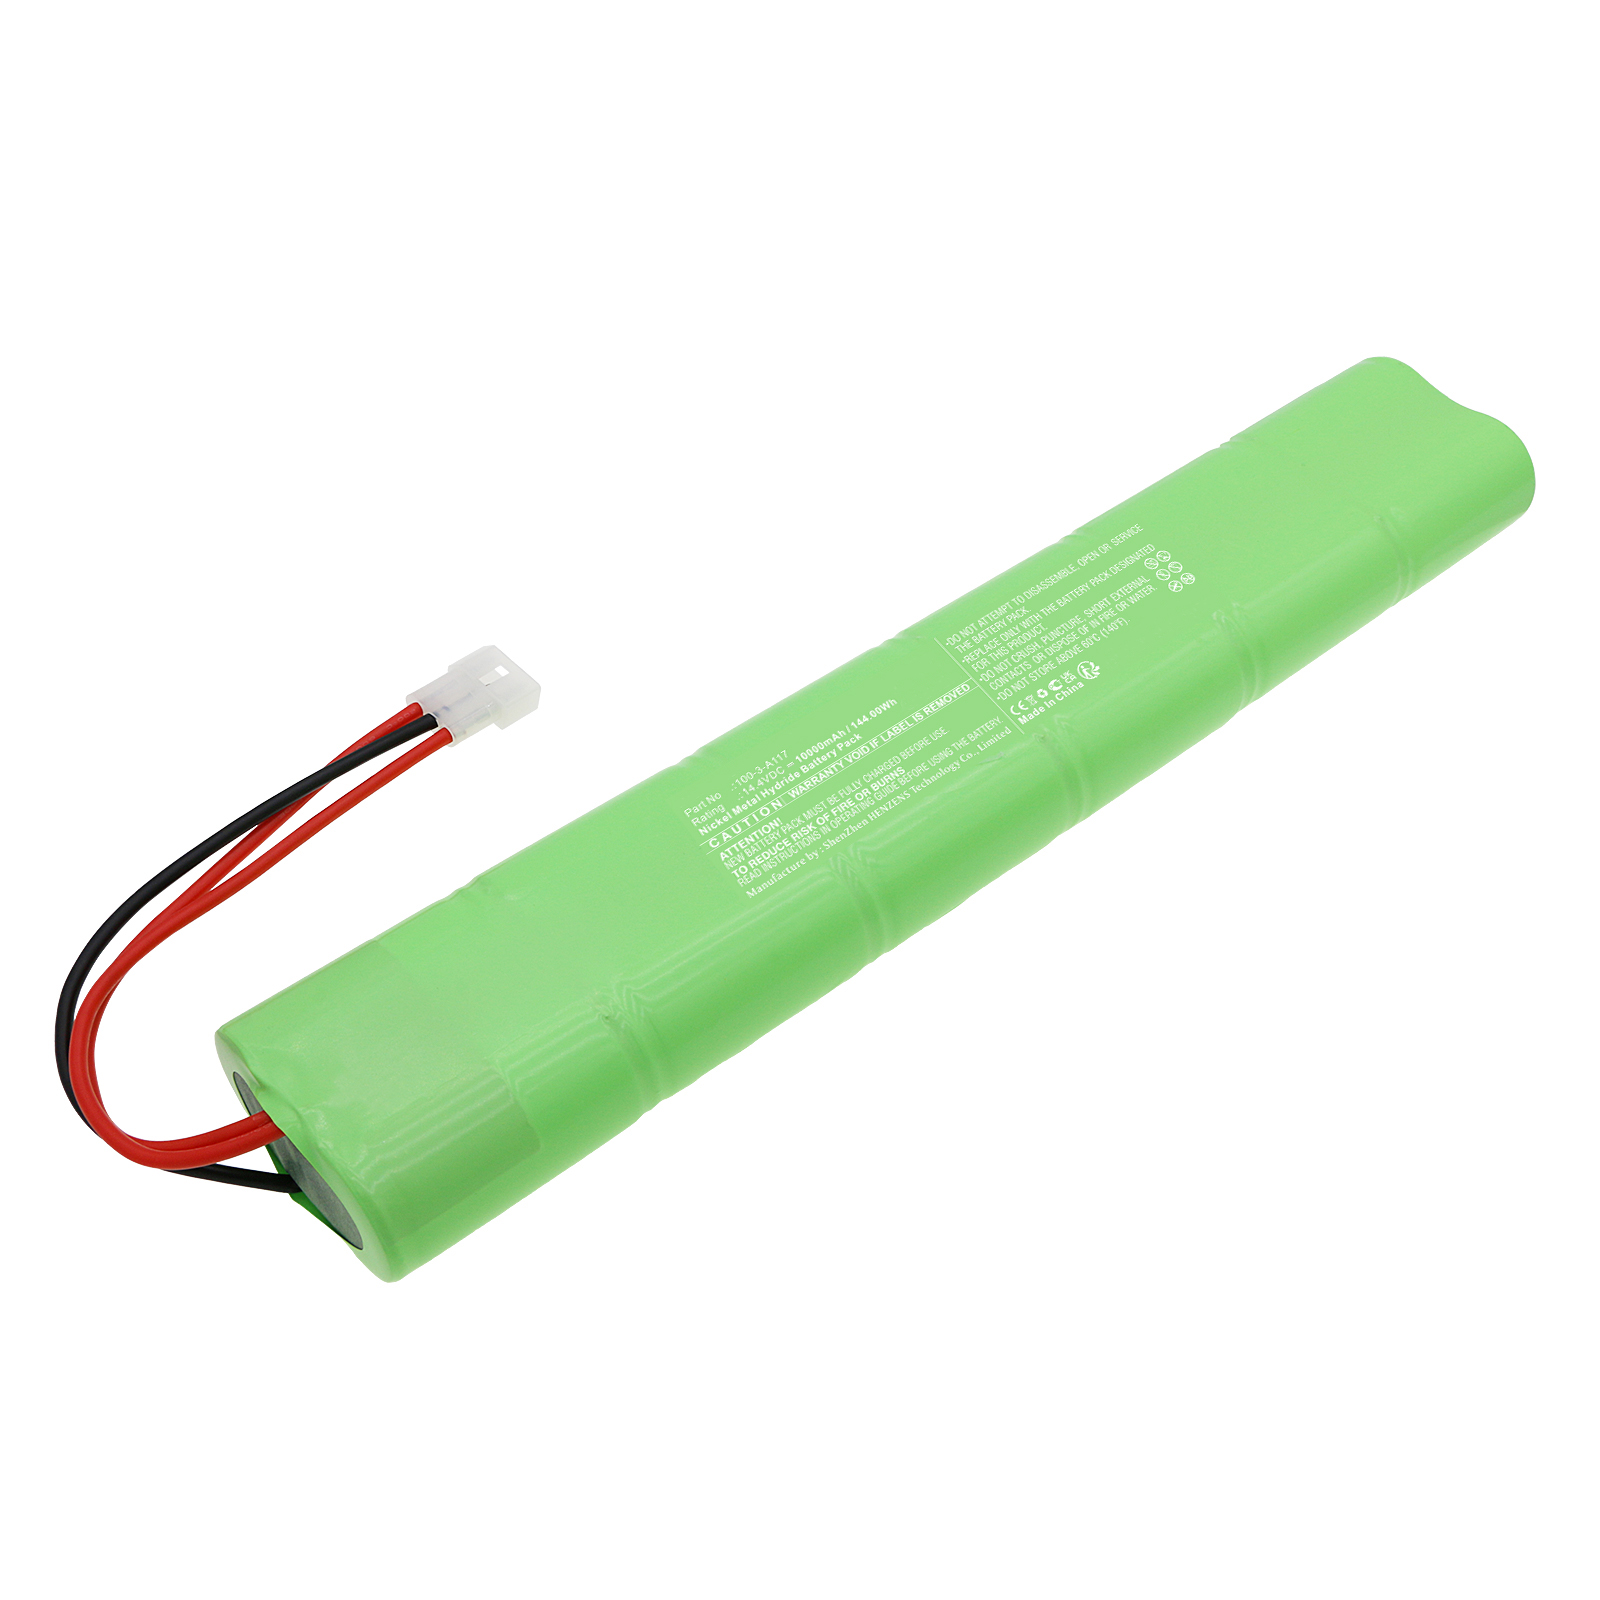 Synergy Digital Emergency Lighting Battery, Compatible with Lithonia 100-3-A117 Emergency Lighting Battery (Ni-MH, 14.4V, 10000mAh)